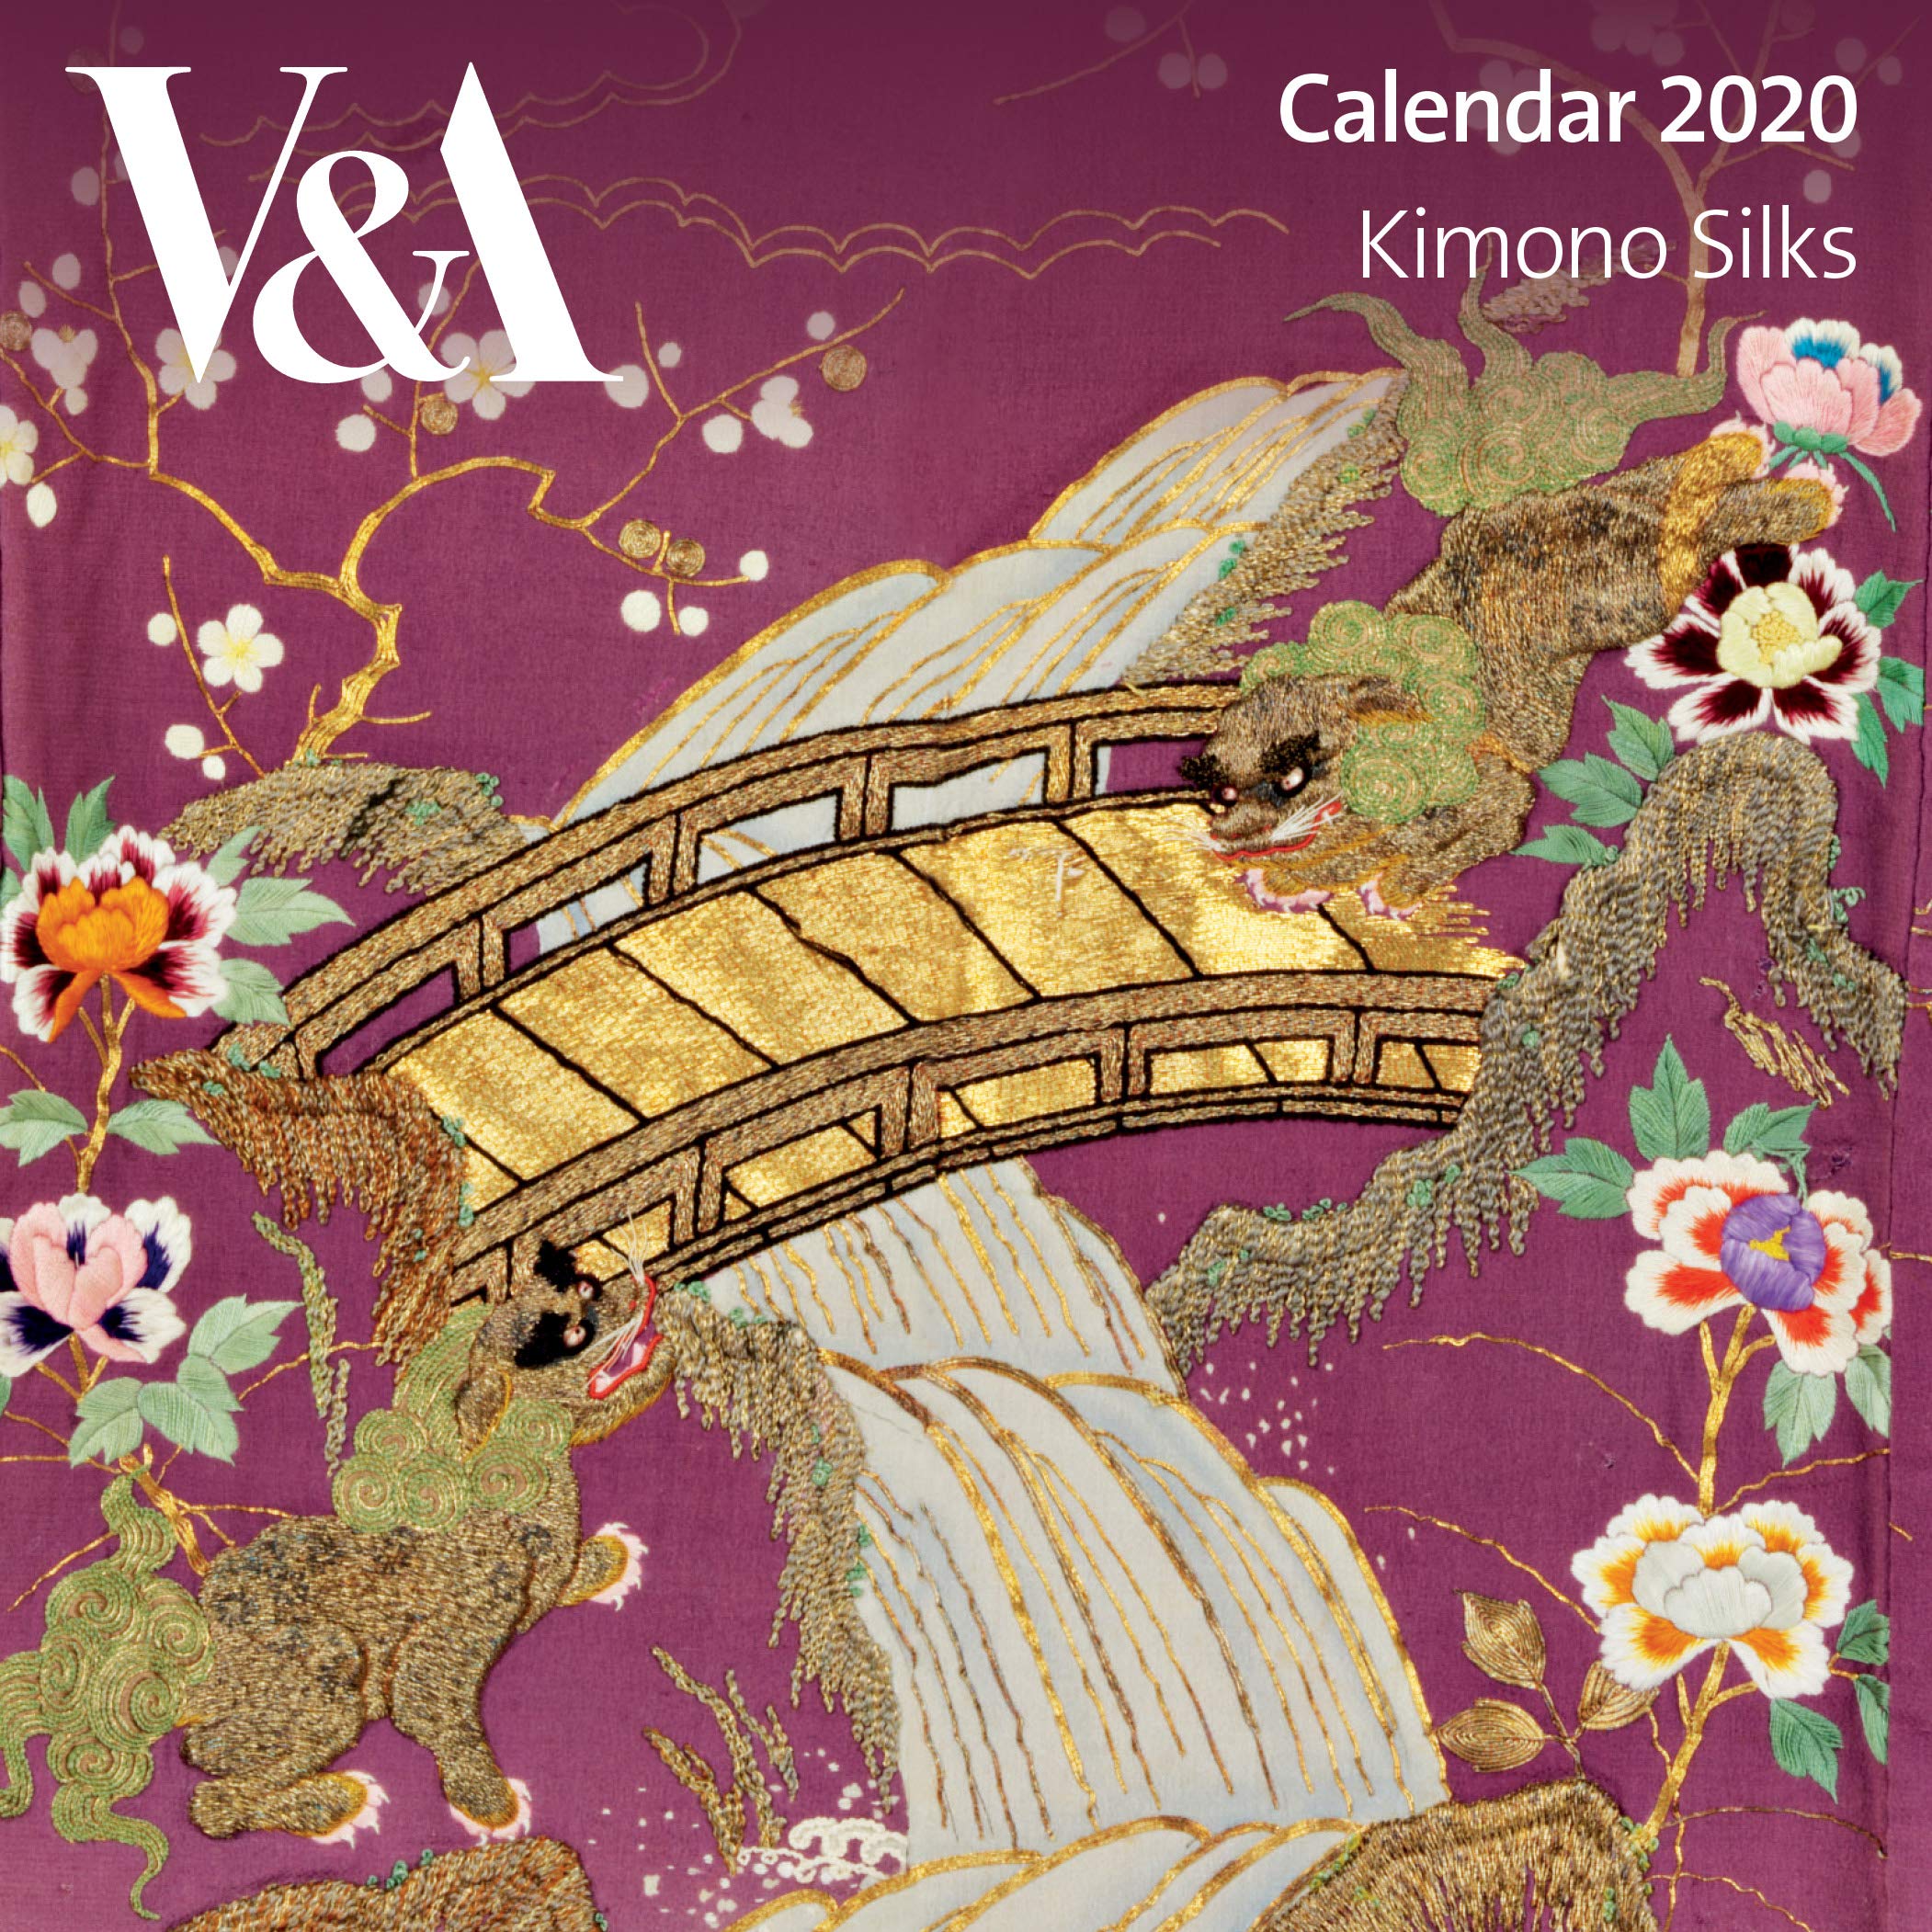 Calendar 2020 - V&A Kimono Silks | Flame Tree Publishing